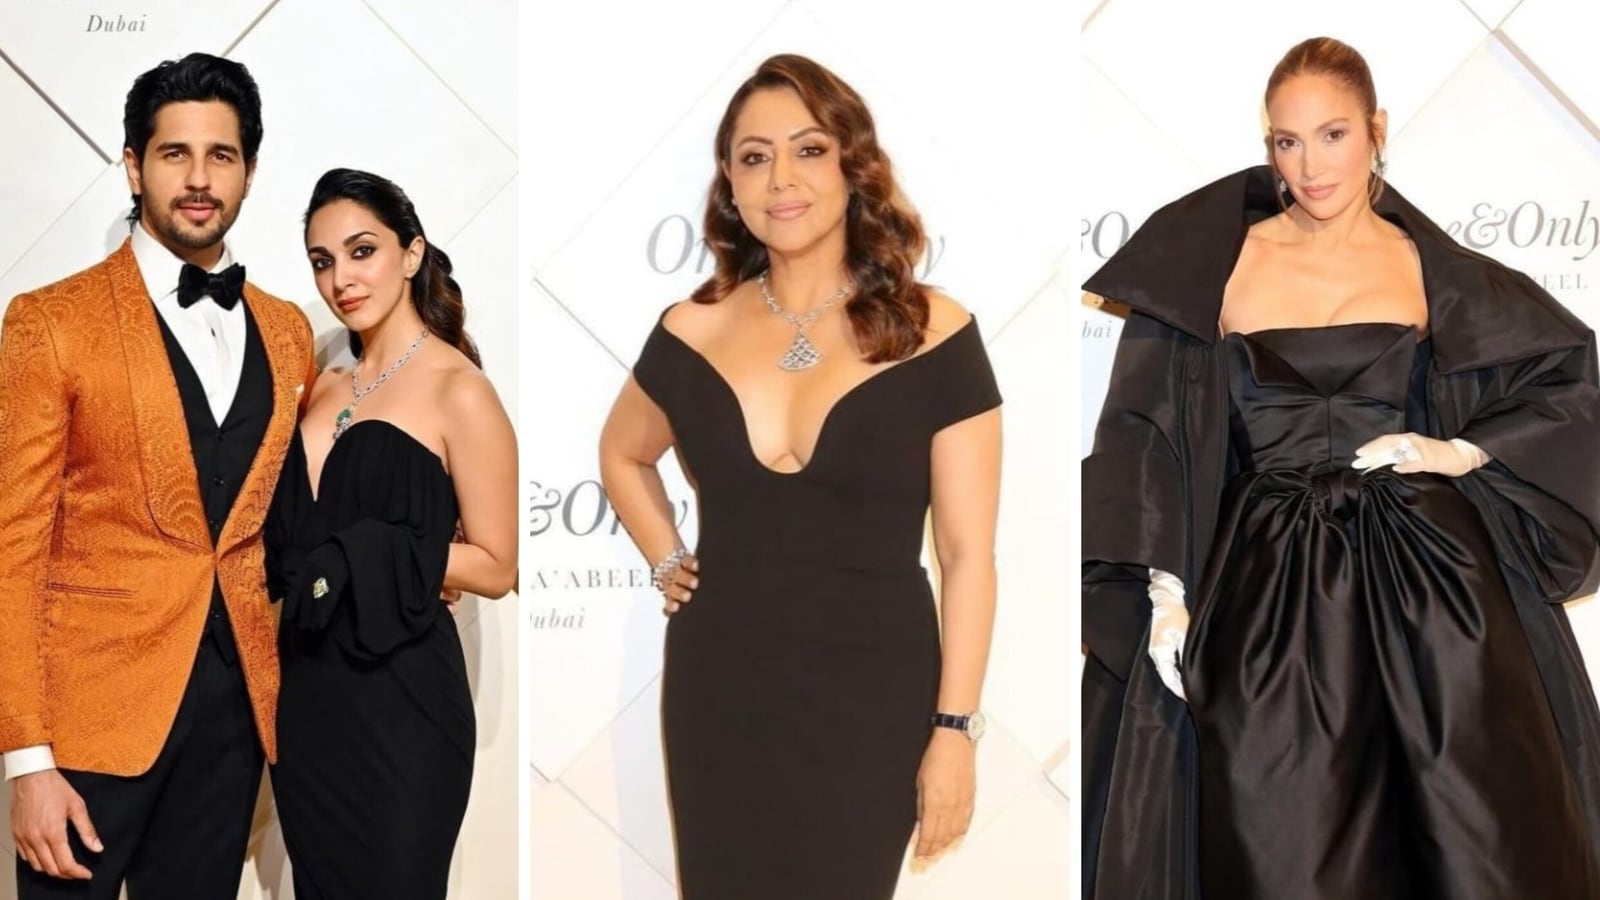 Kiara Advani, Sidharth Malhotra, Gauri Khan, Jennifer Lopez attend Dubai event | Bollywood